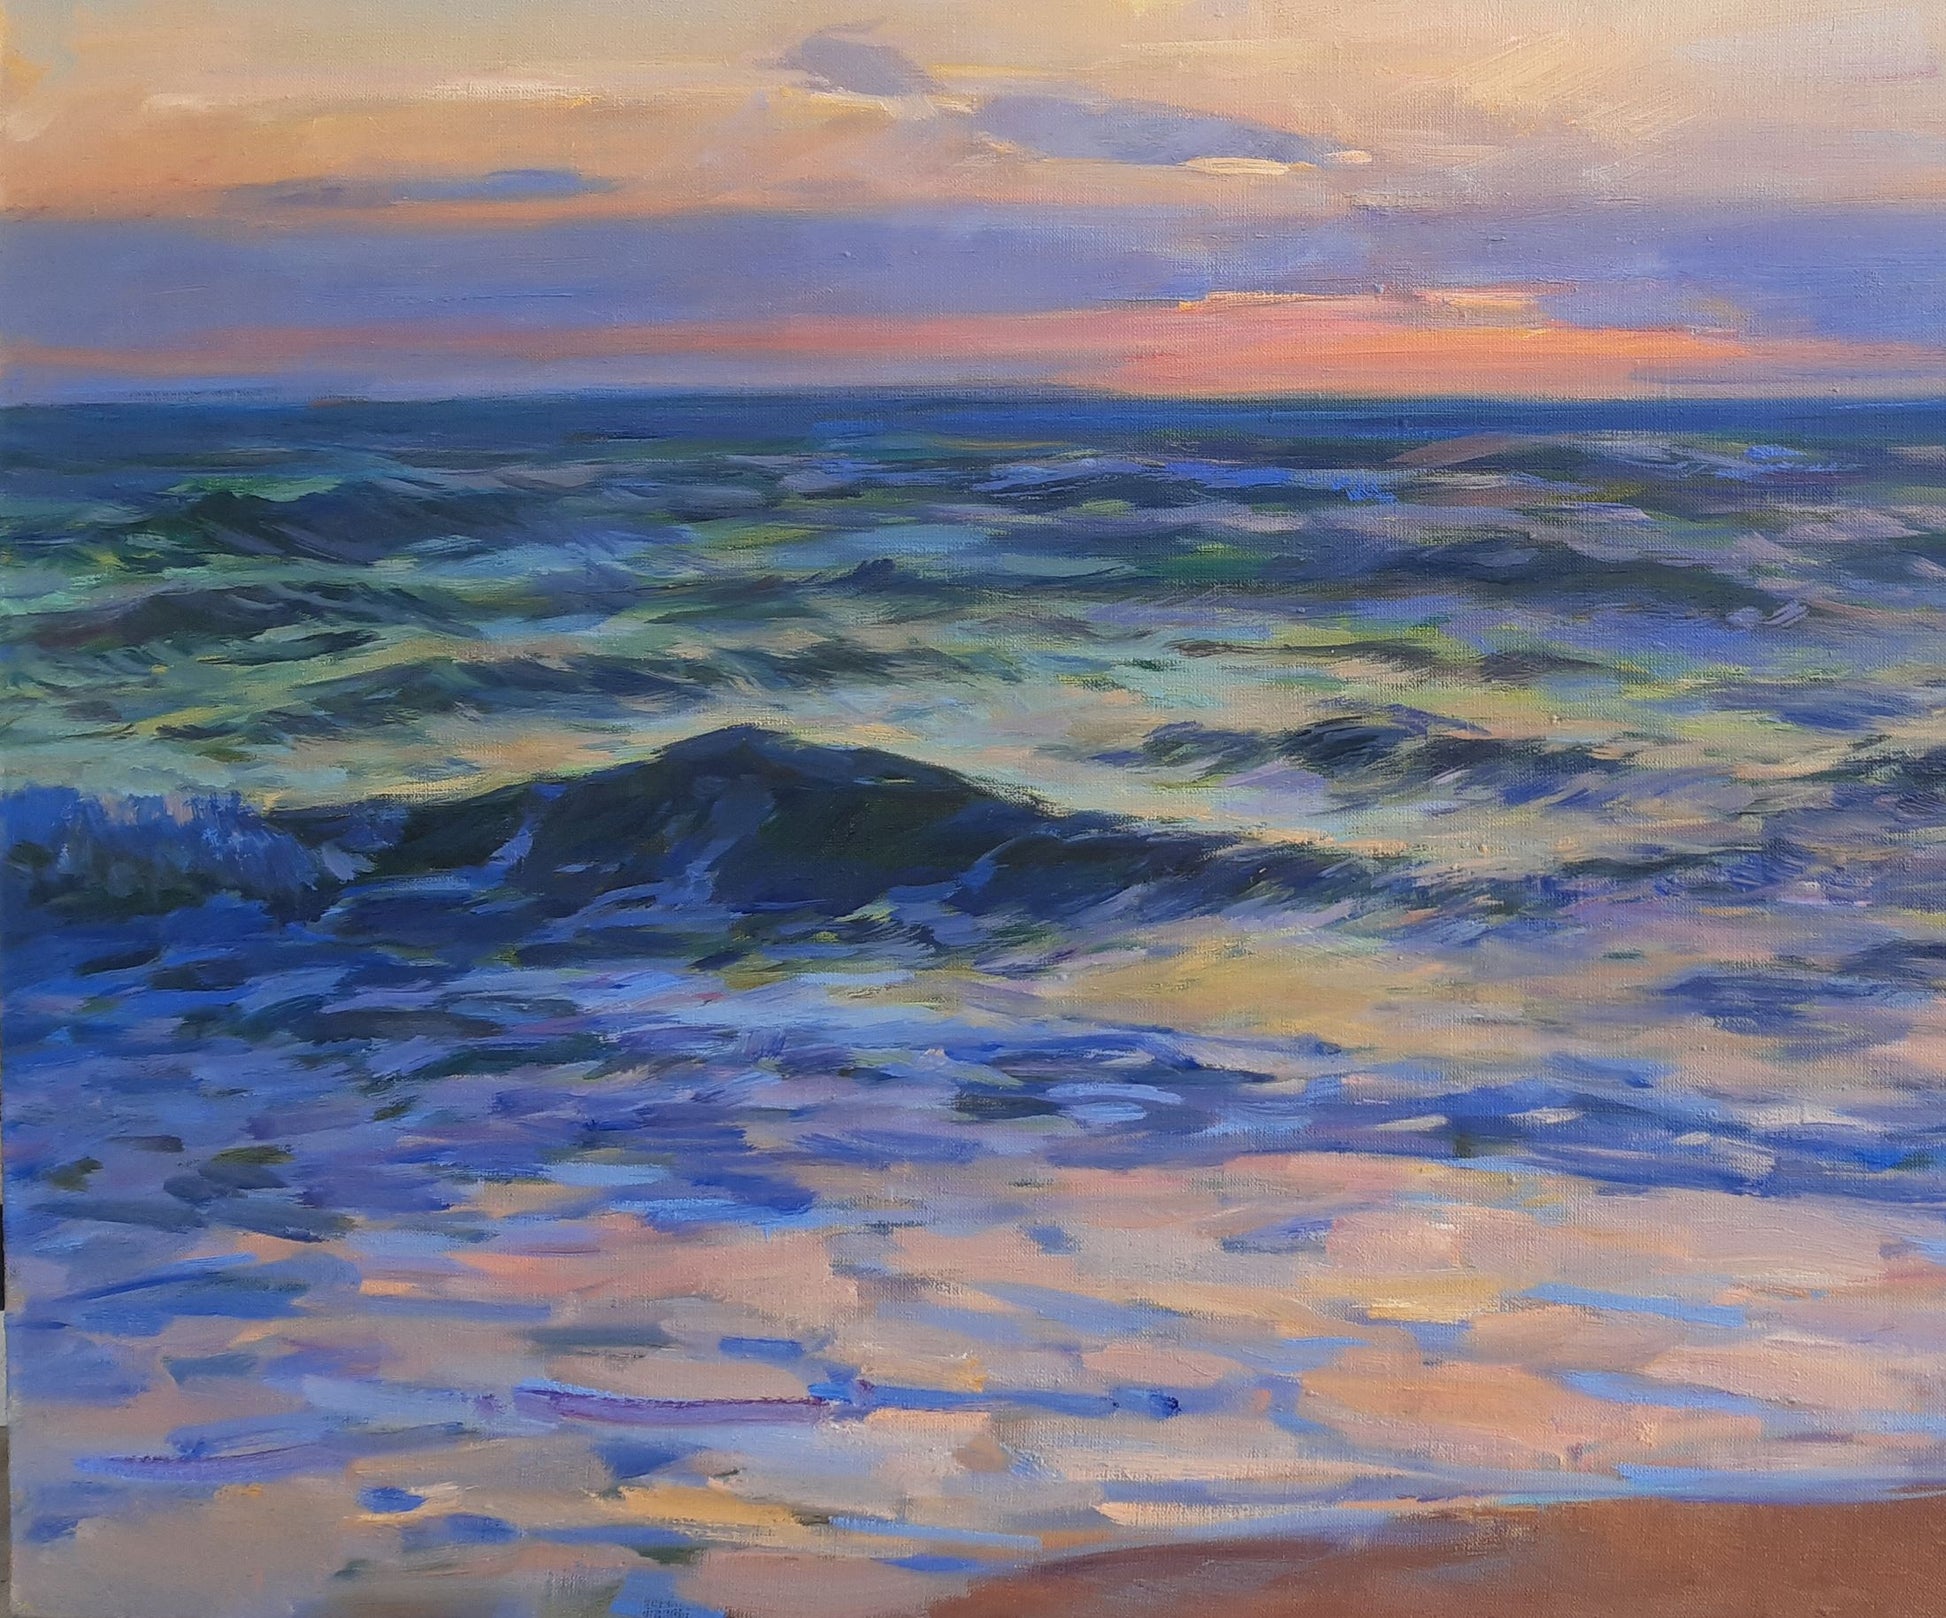 Vyacheslav Pereta's oil painting "Evening at Sea"